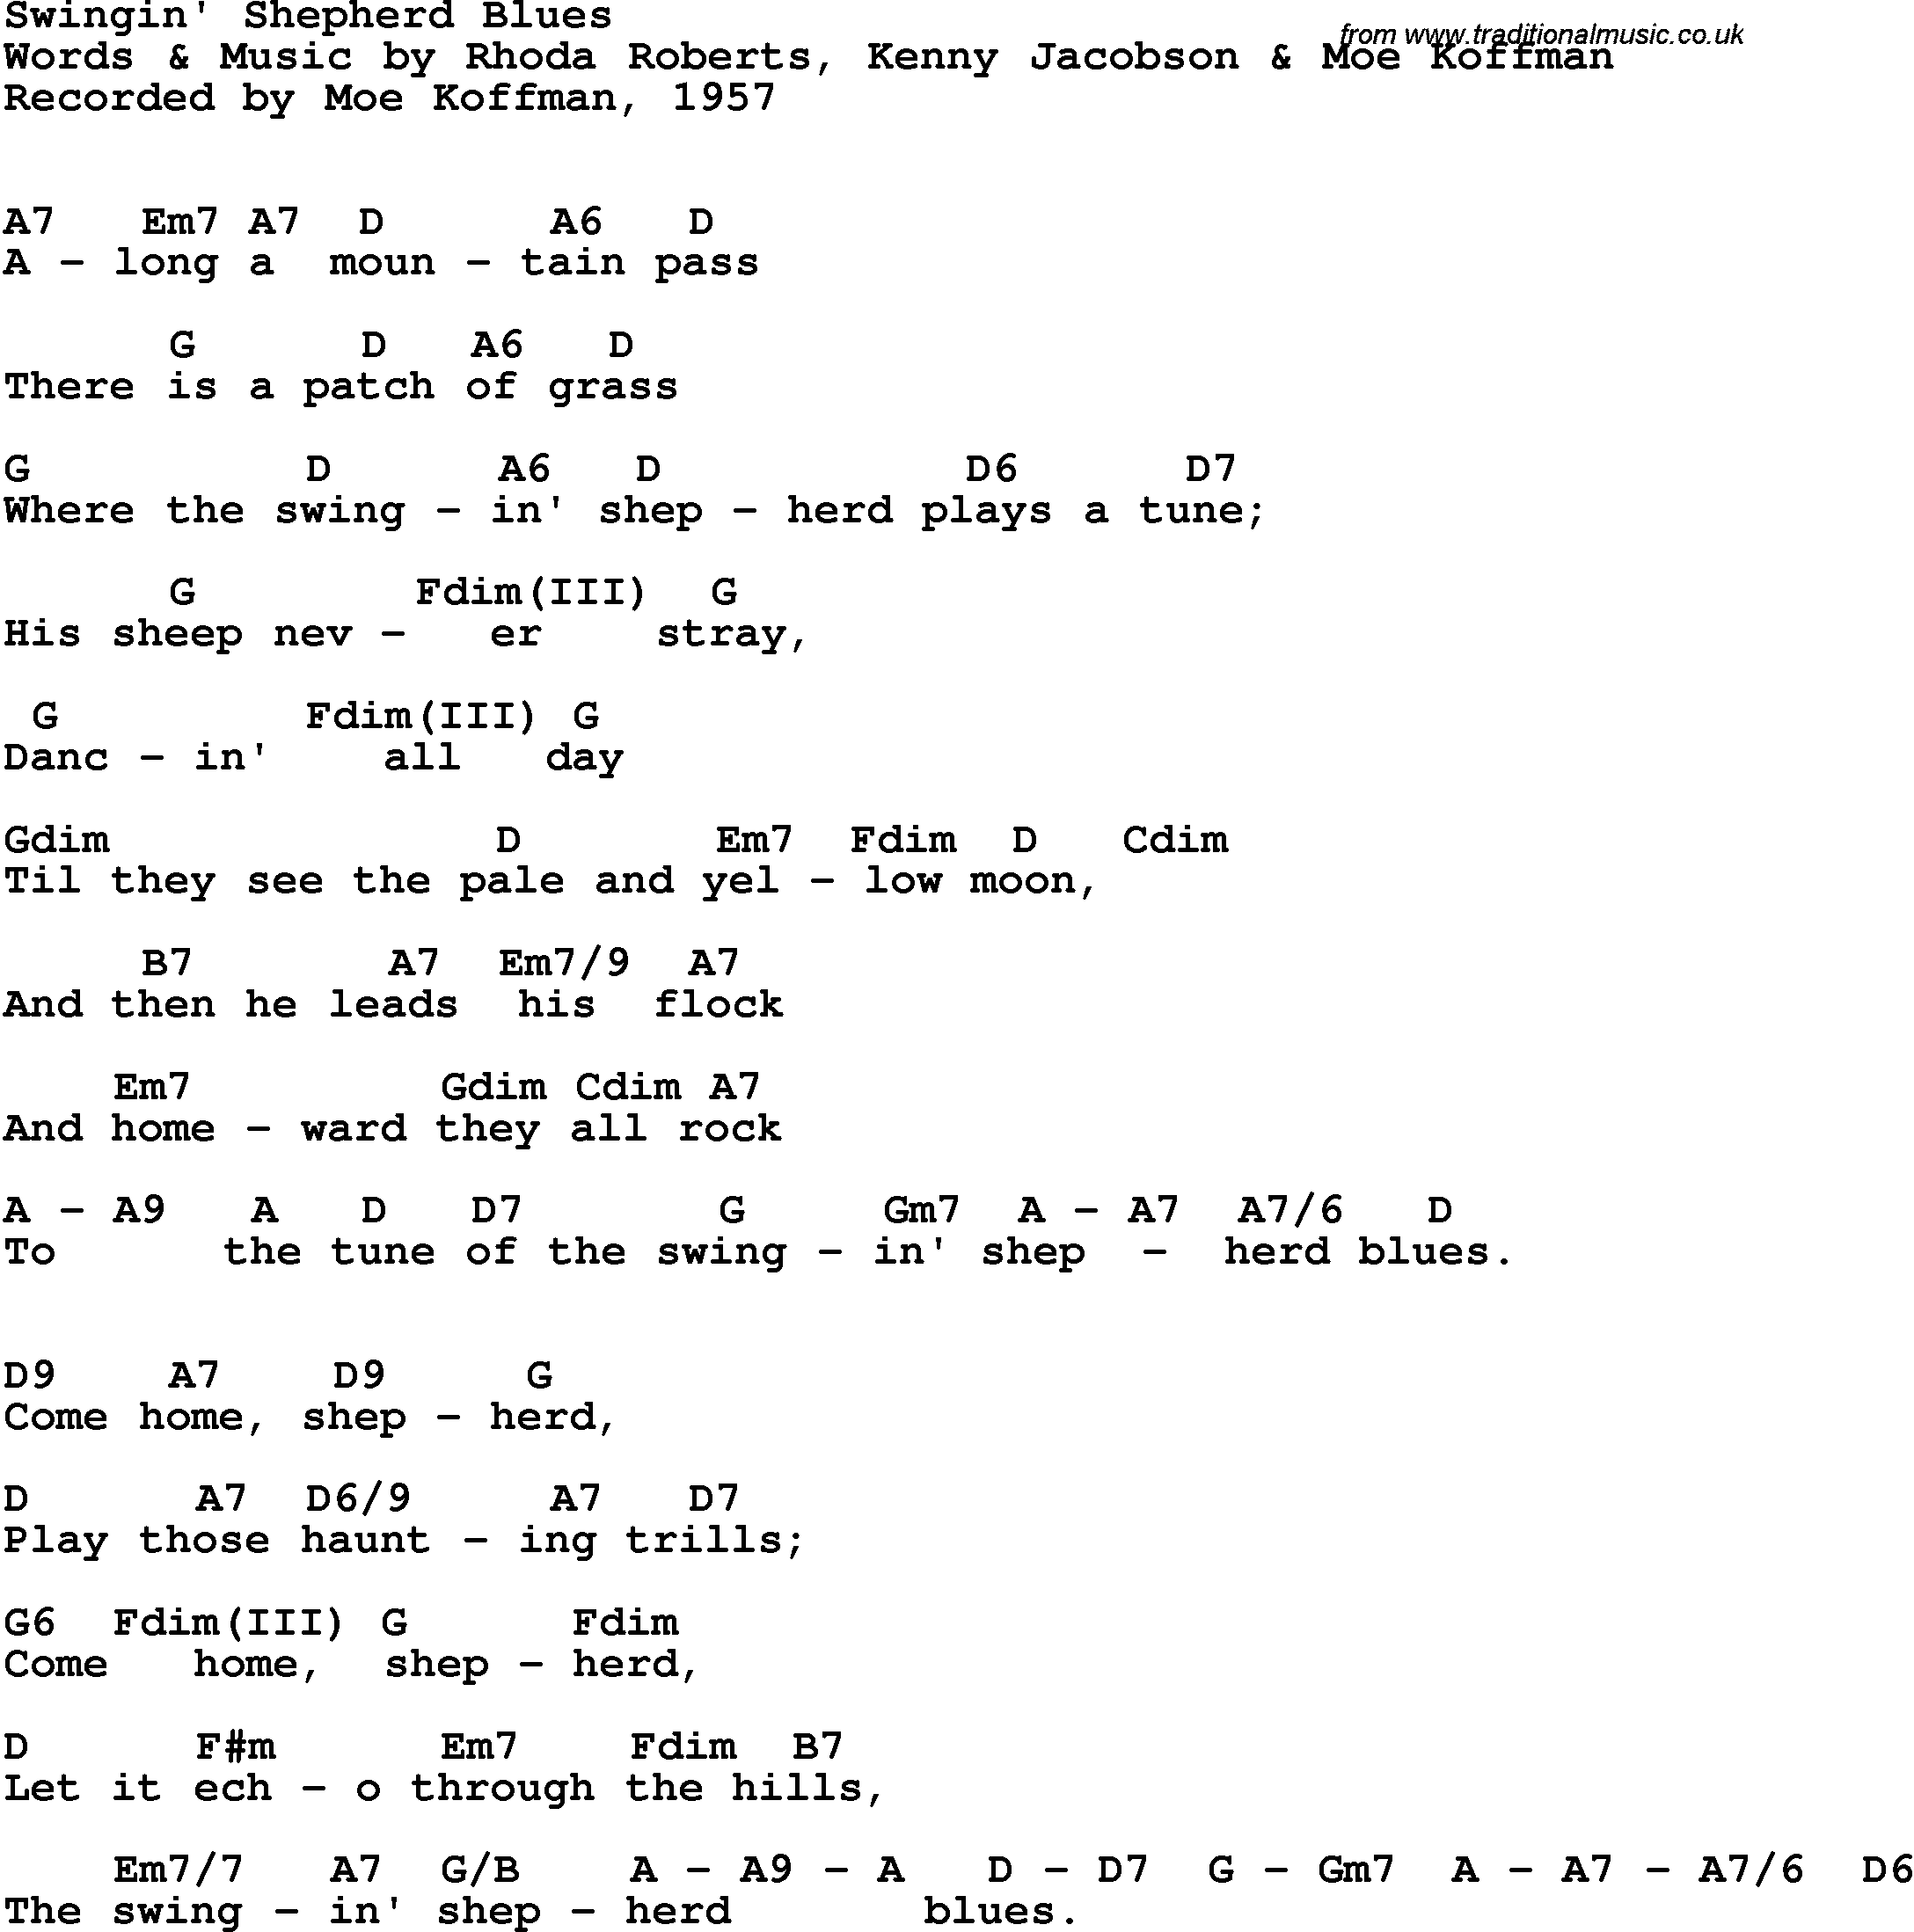 Song Lyrics with guitar chords for Swingin' Shepherd Blues - Moe Koffman, 1957